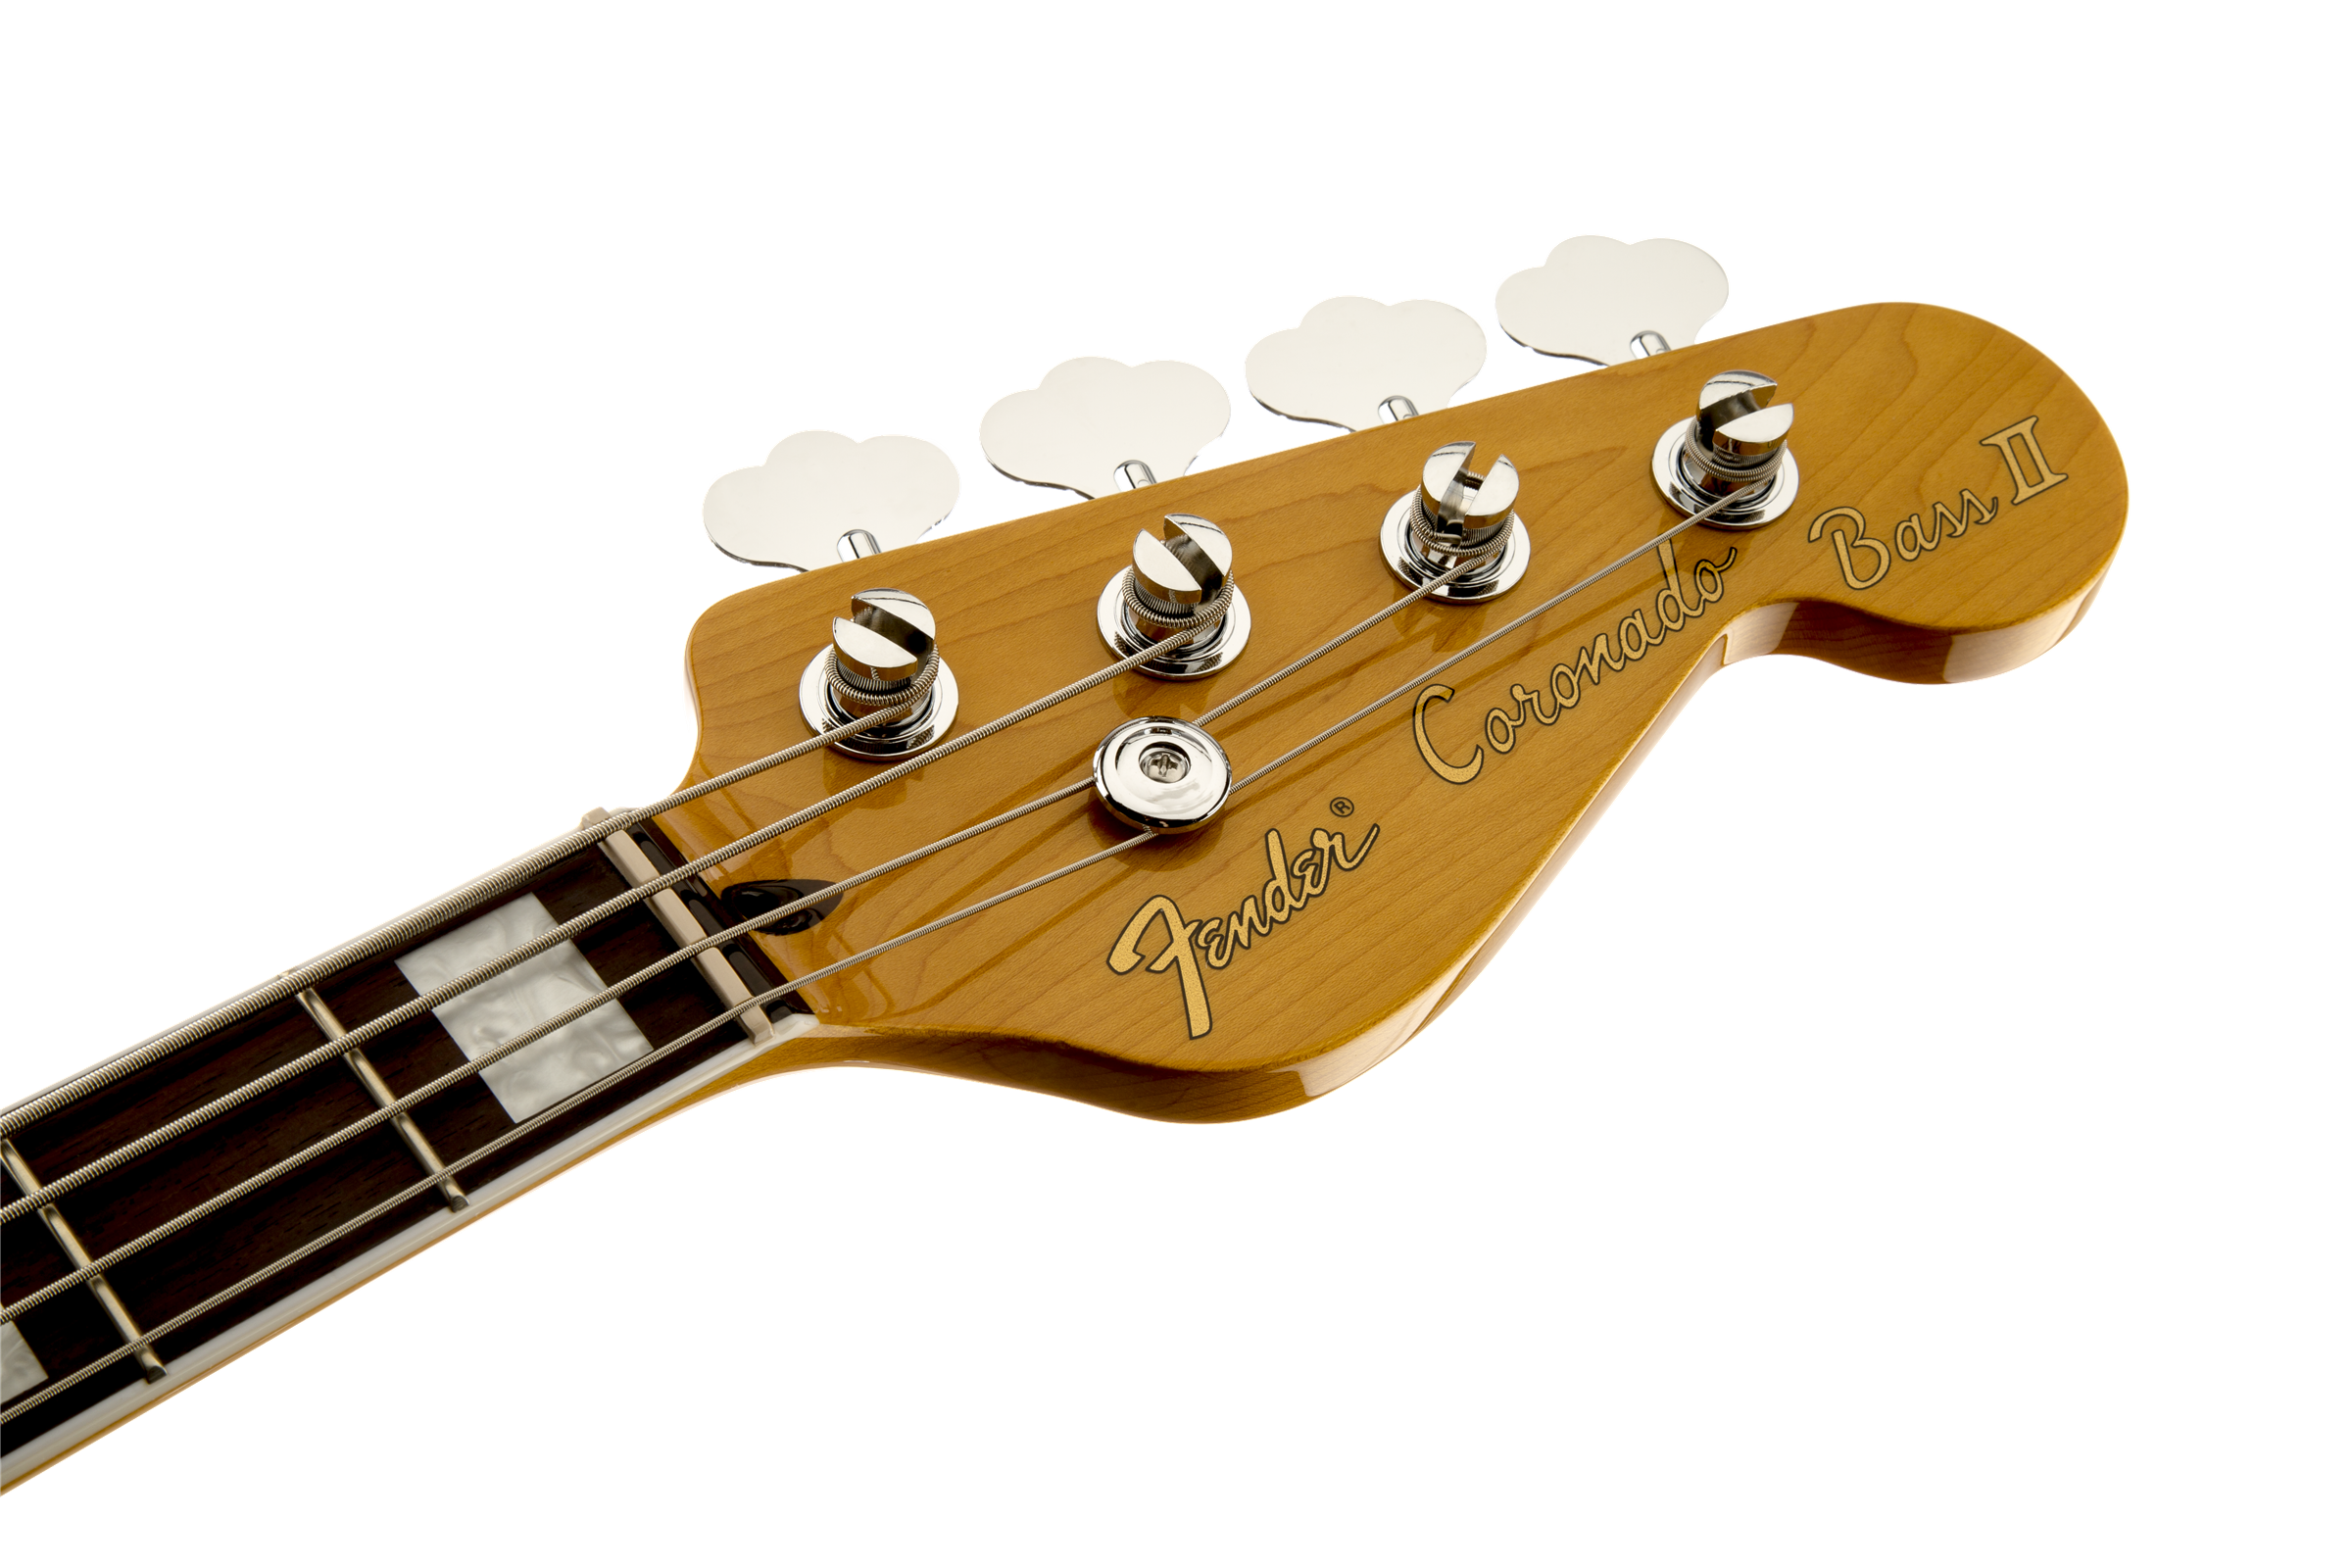 Fender serial number